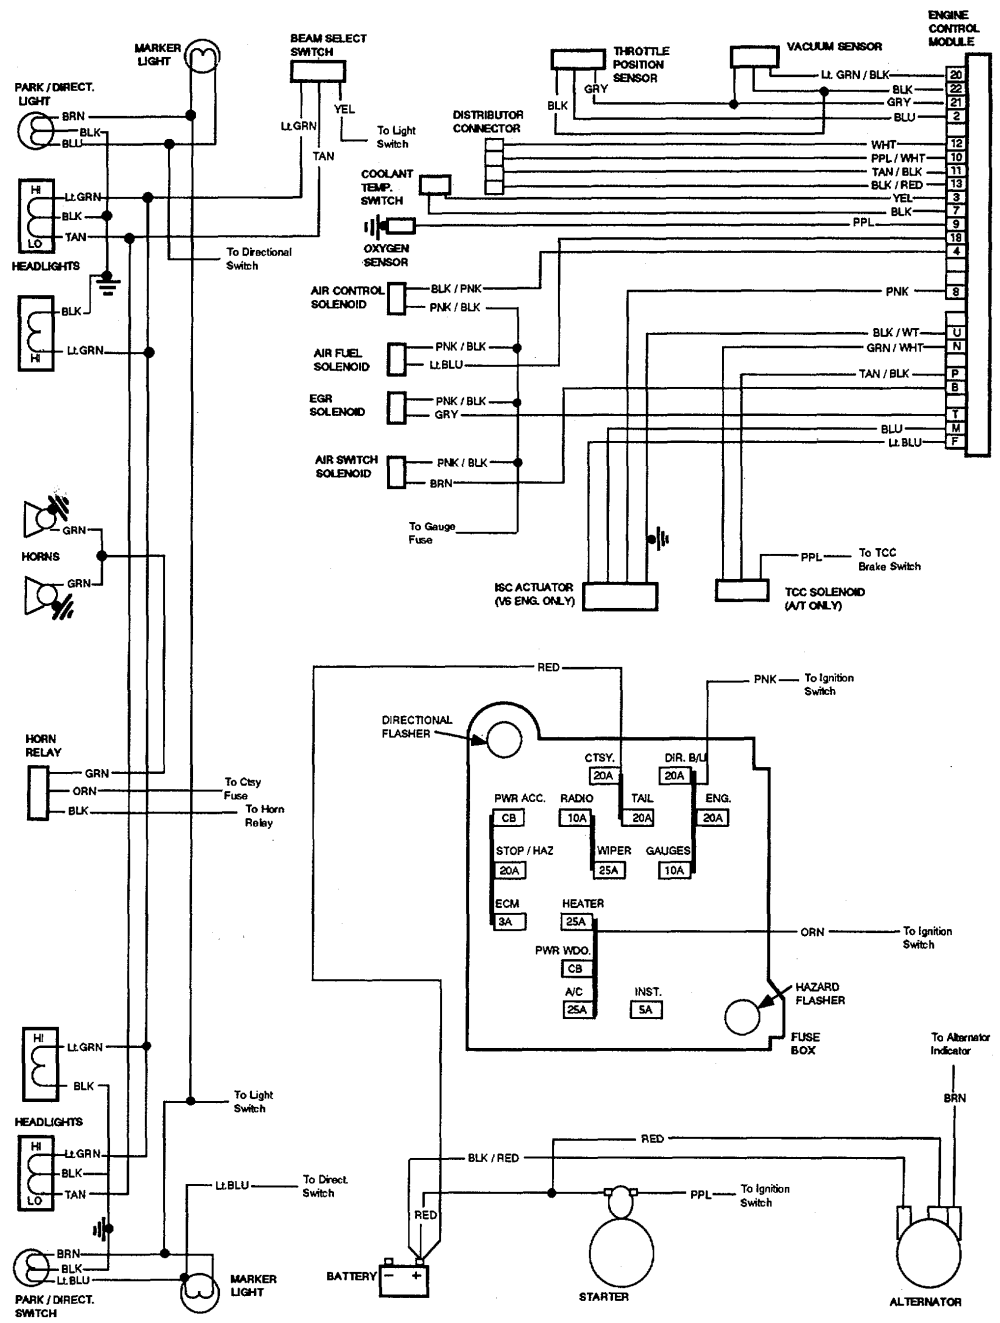 1985 Monte Carlo Wiring Diagram Wiring Diagrams